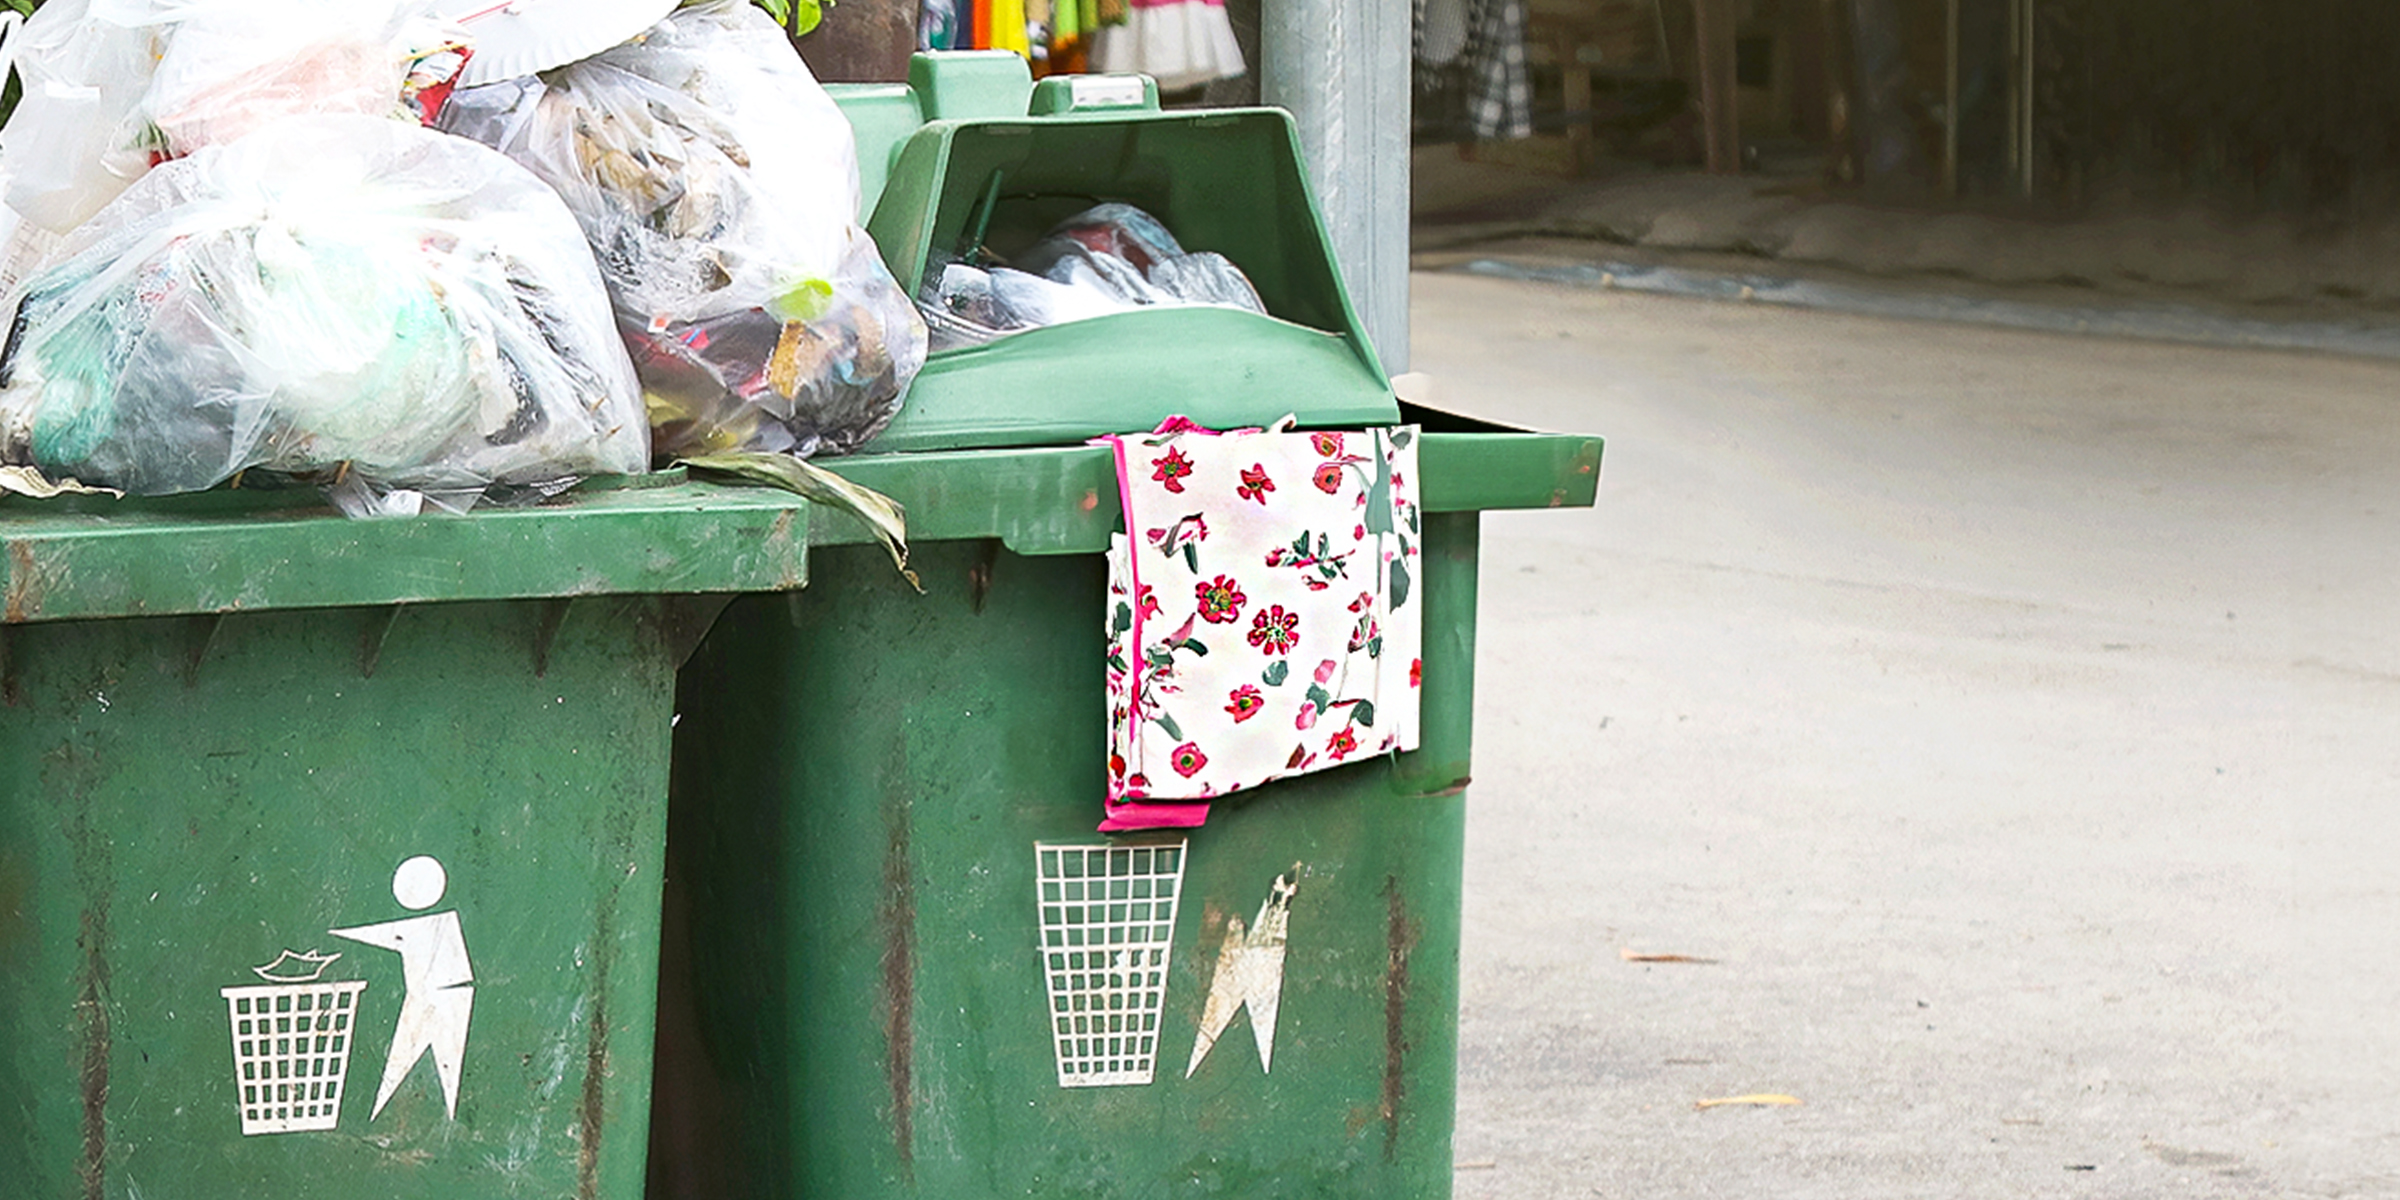 A floral apron in a garbage bin | Source: Shutterstock